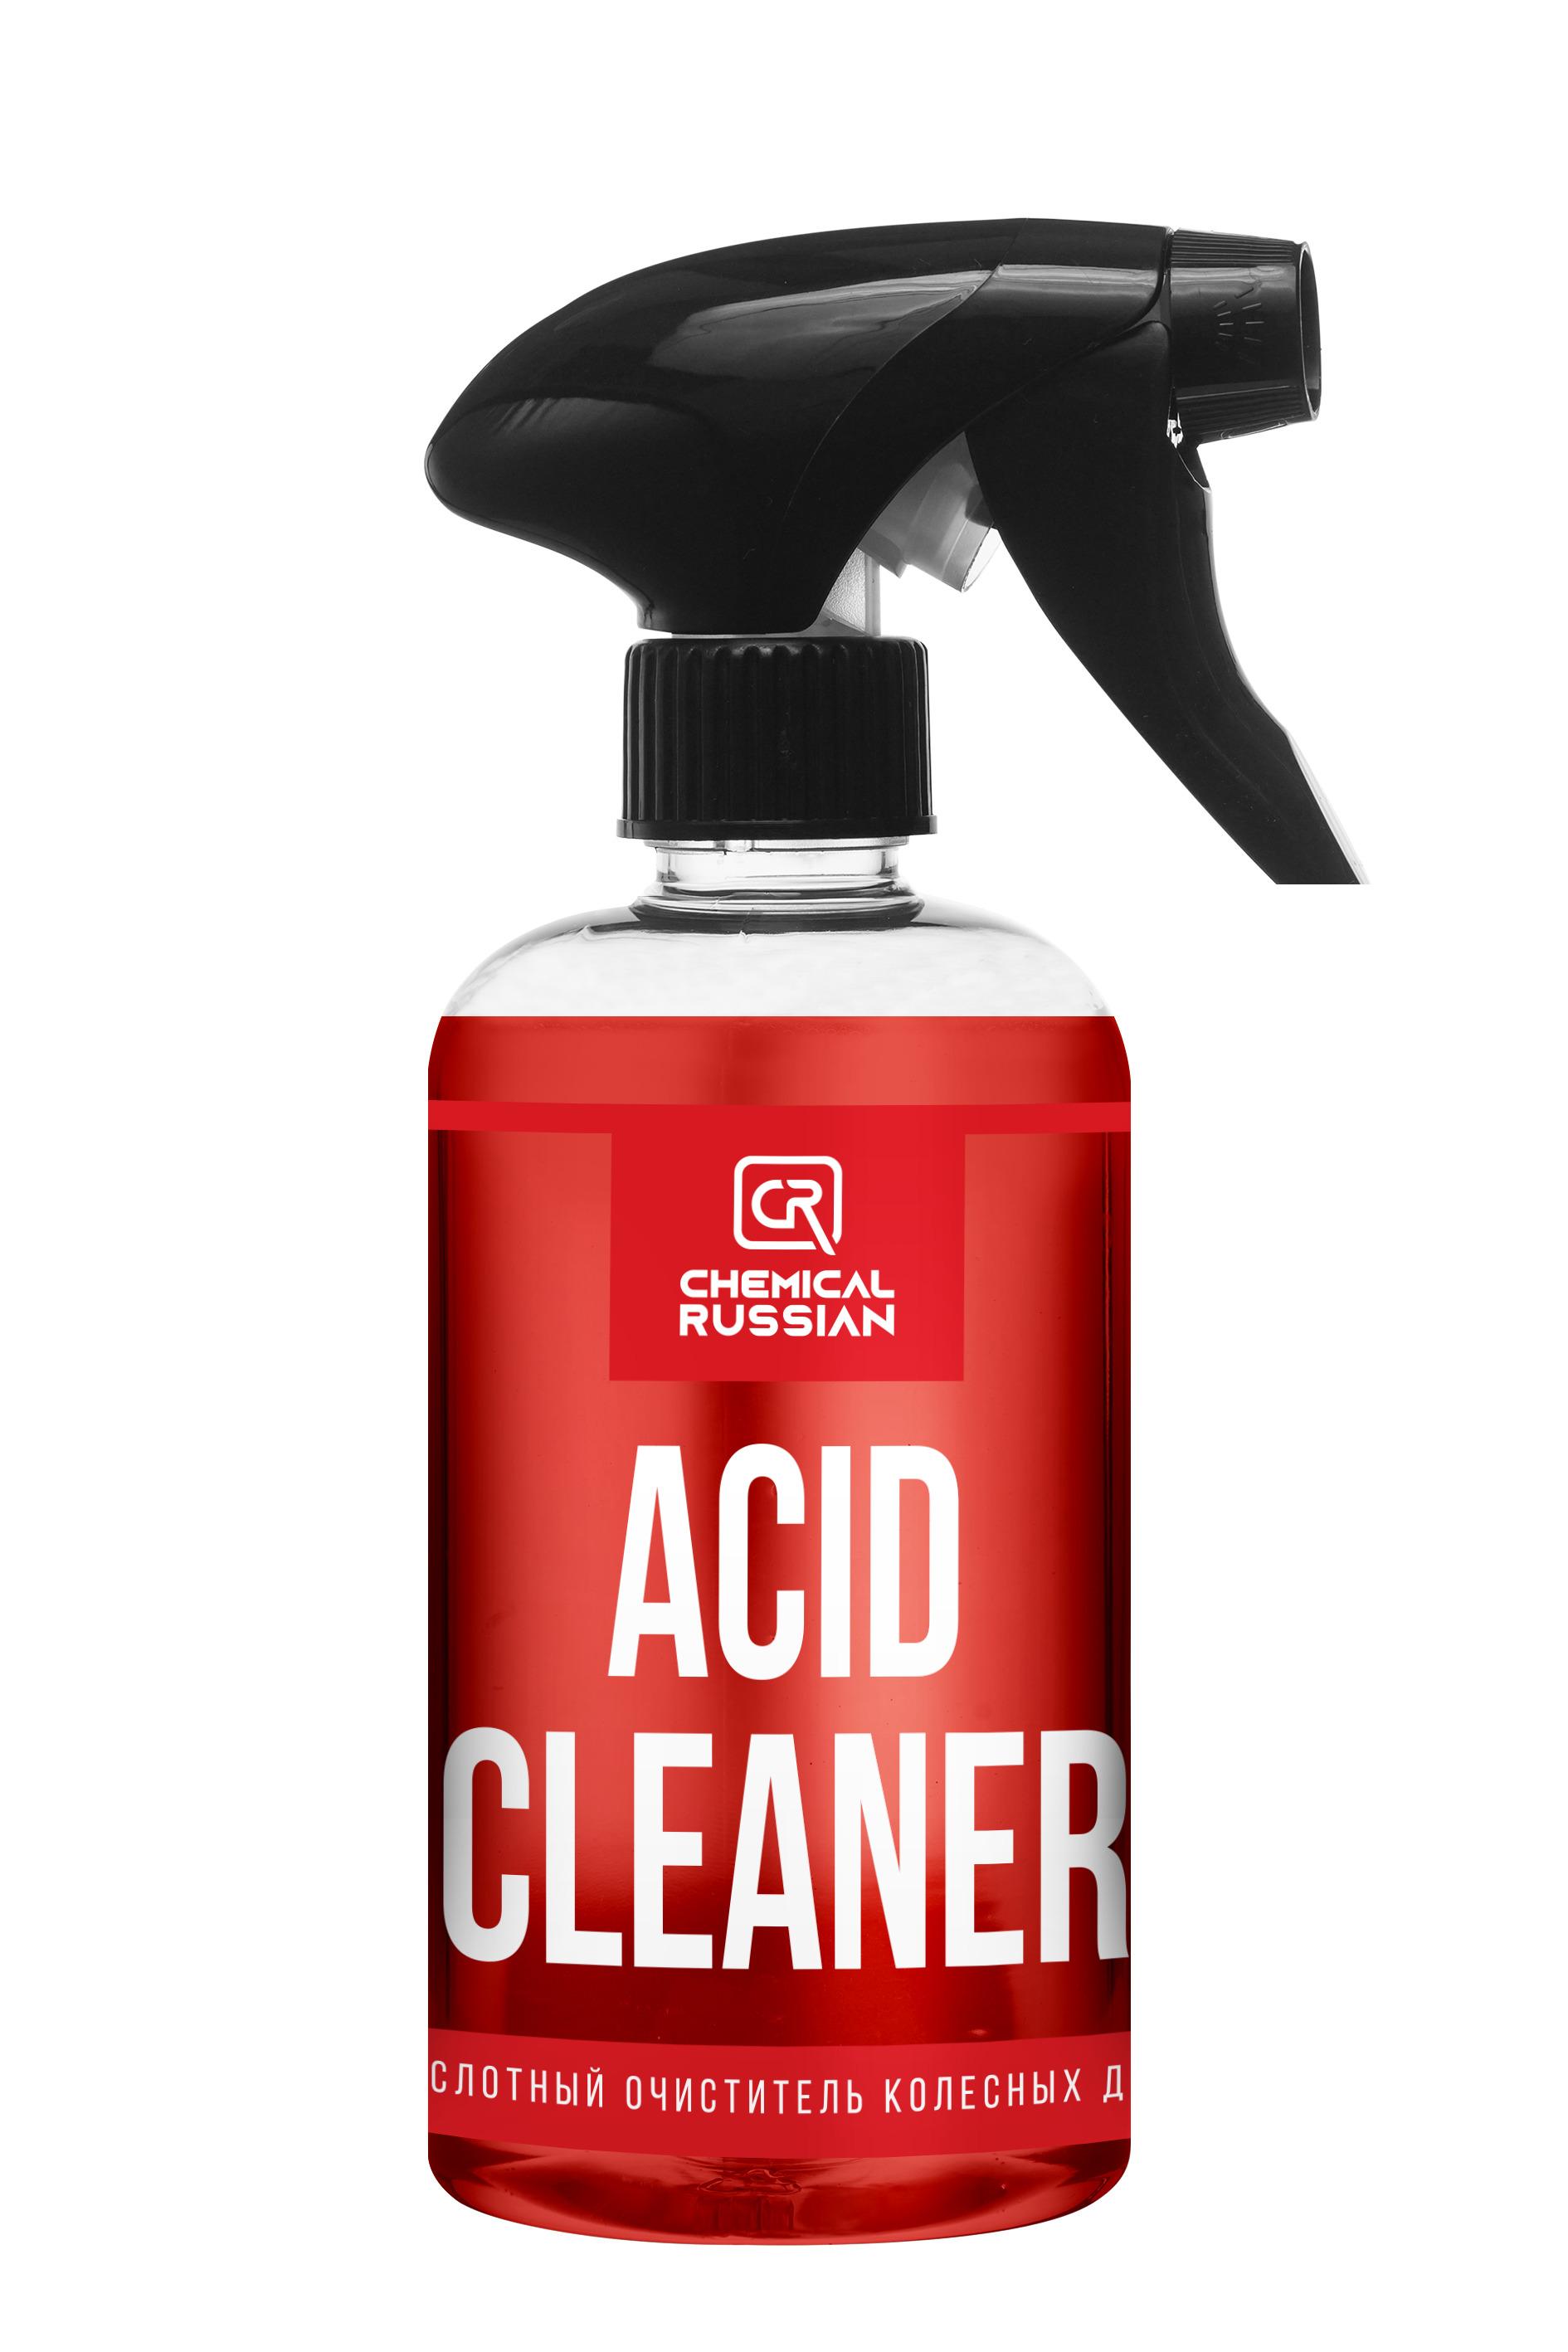 Acid Cleaner, 500 мл, Chemical Russian / Очиститель дисков автомобиля, очиститель колесных дисков